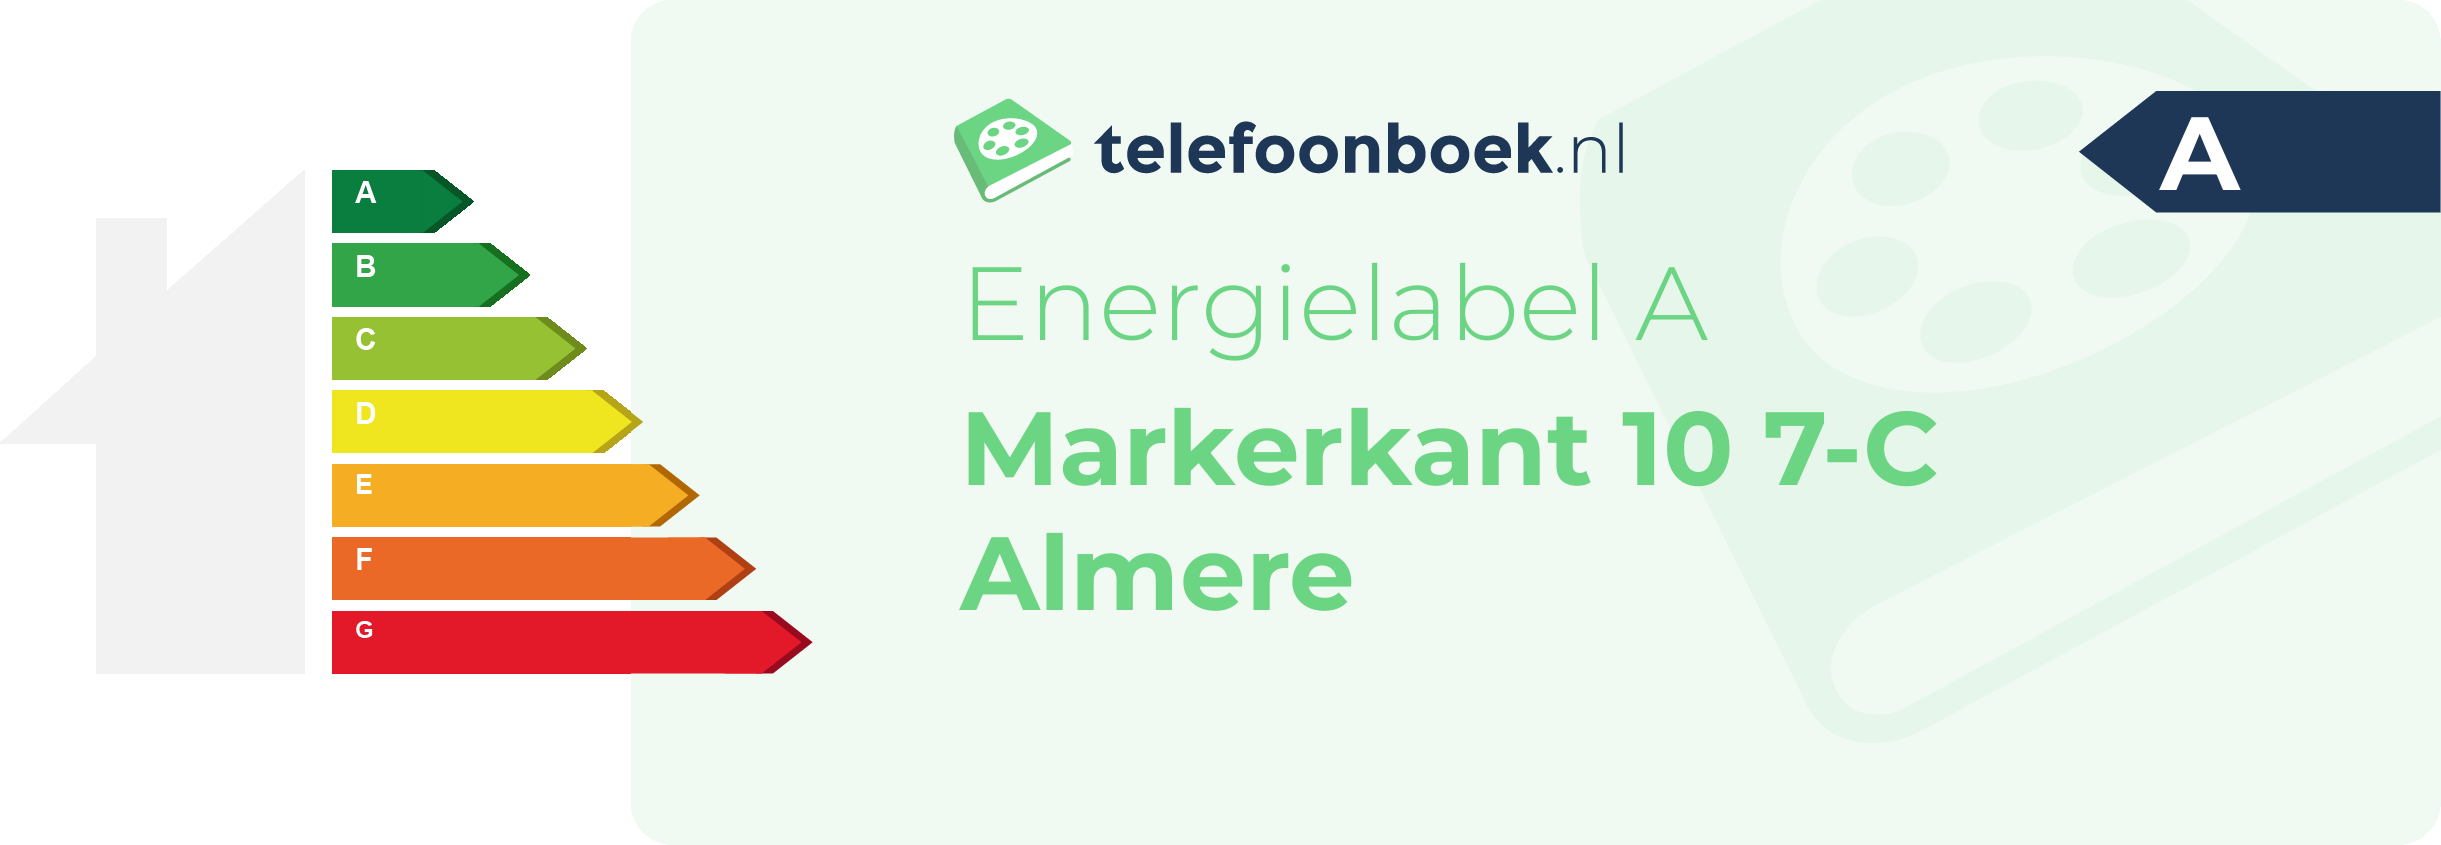 Energielabel Markerkant 10 7-C Almere